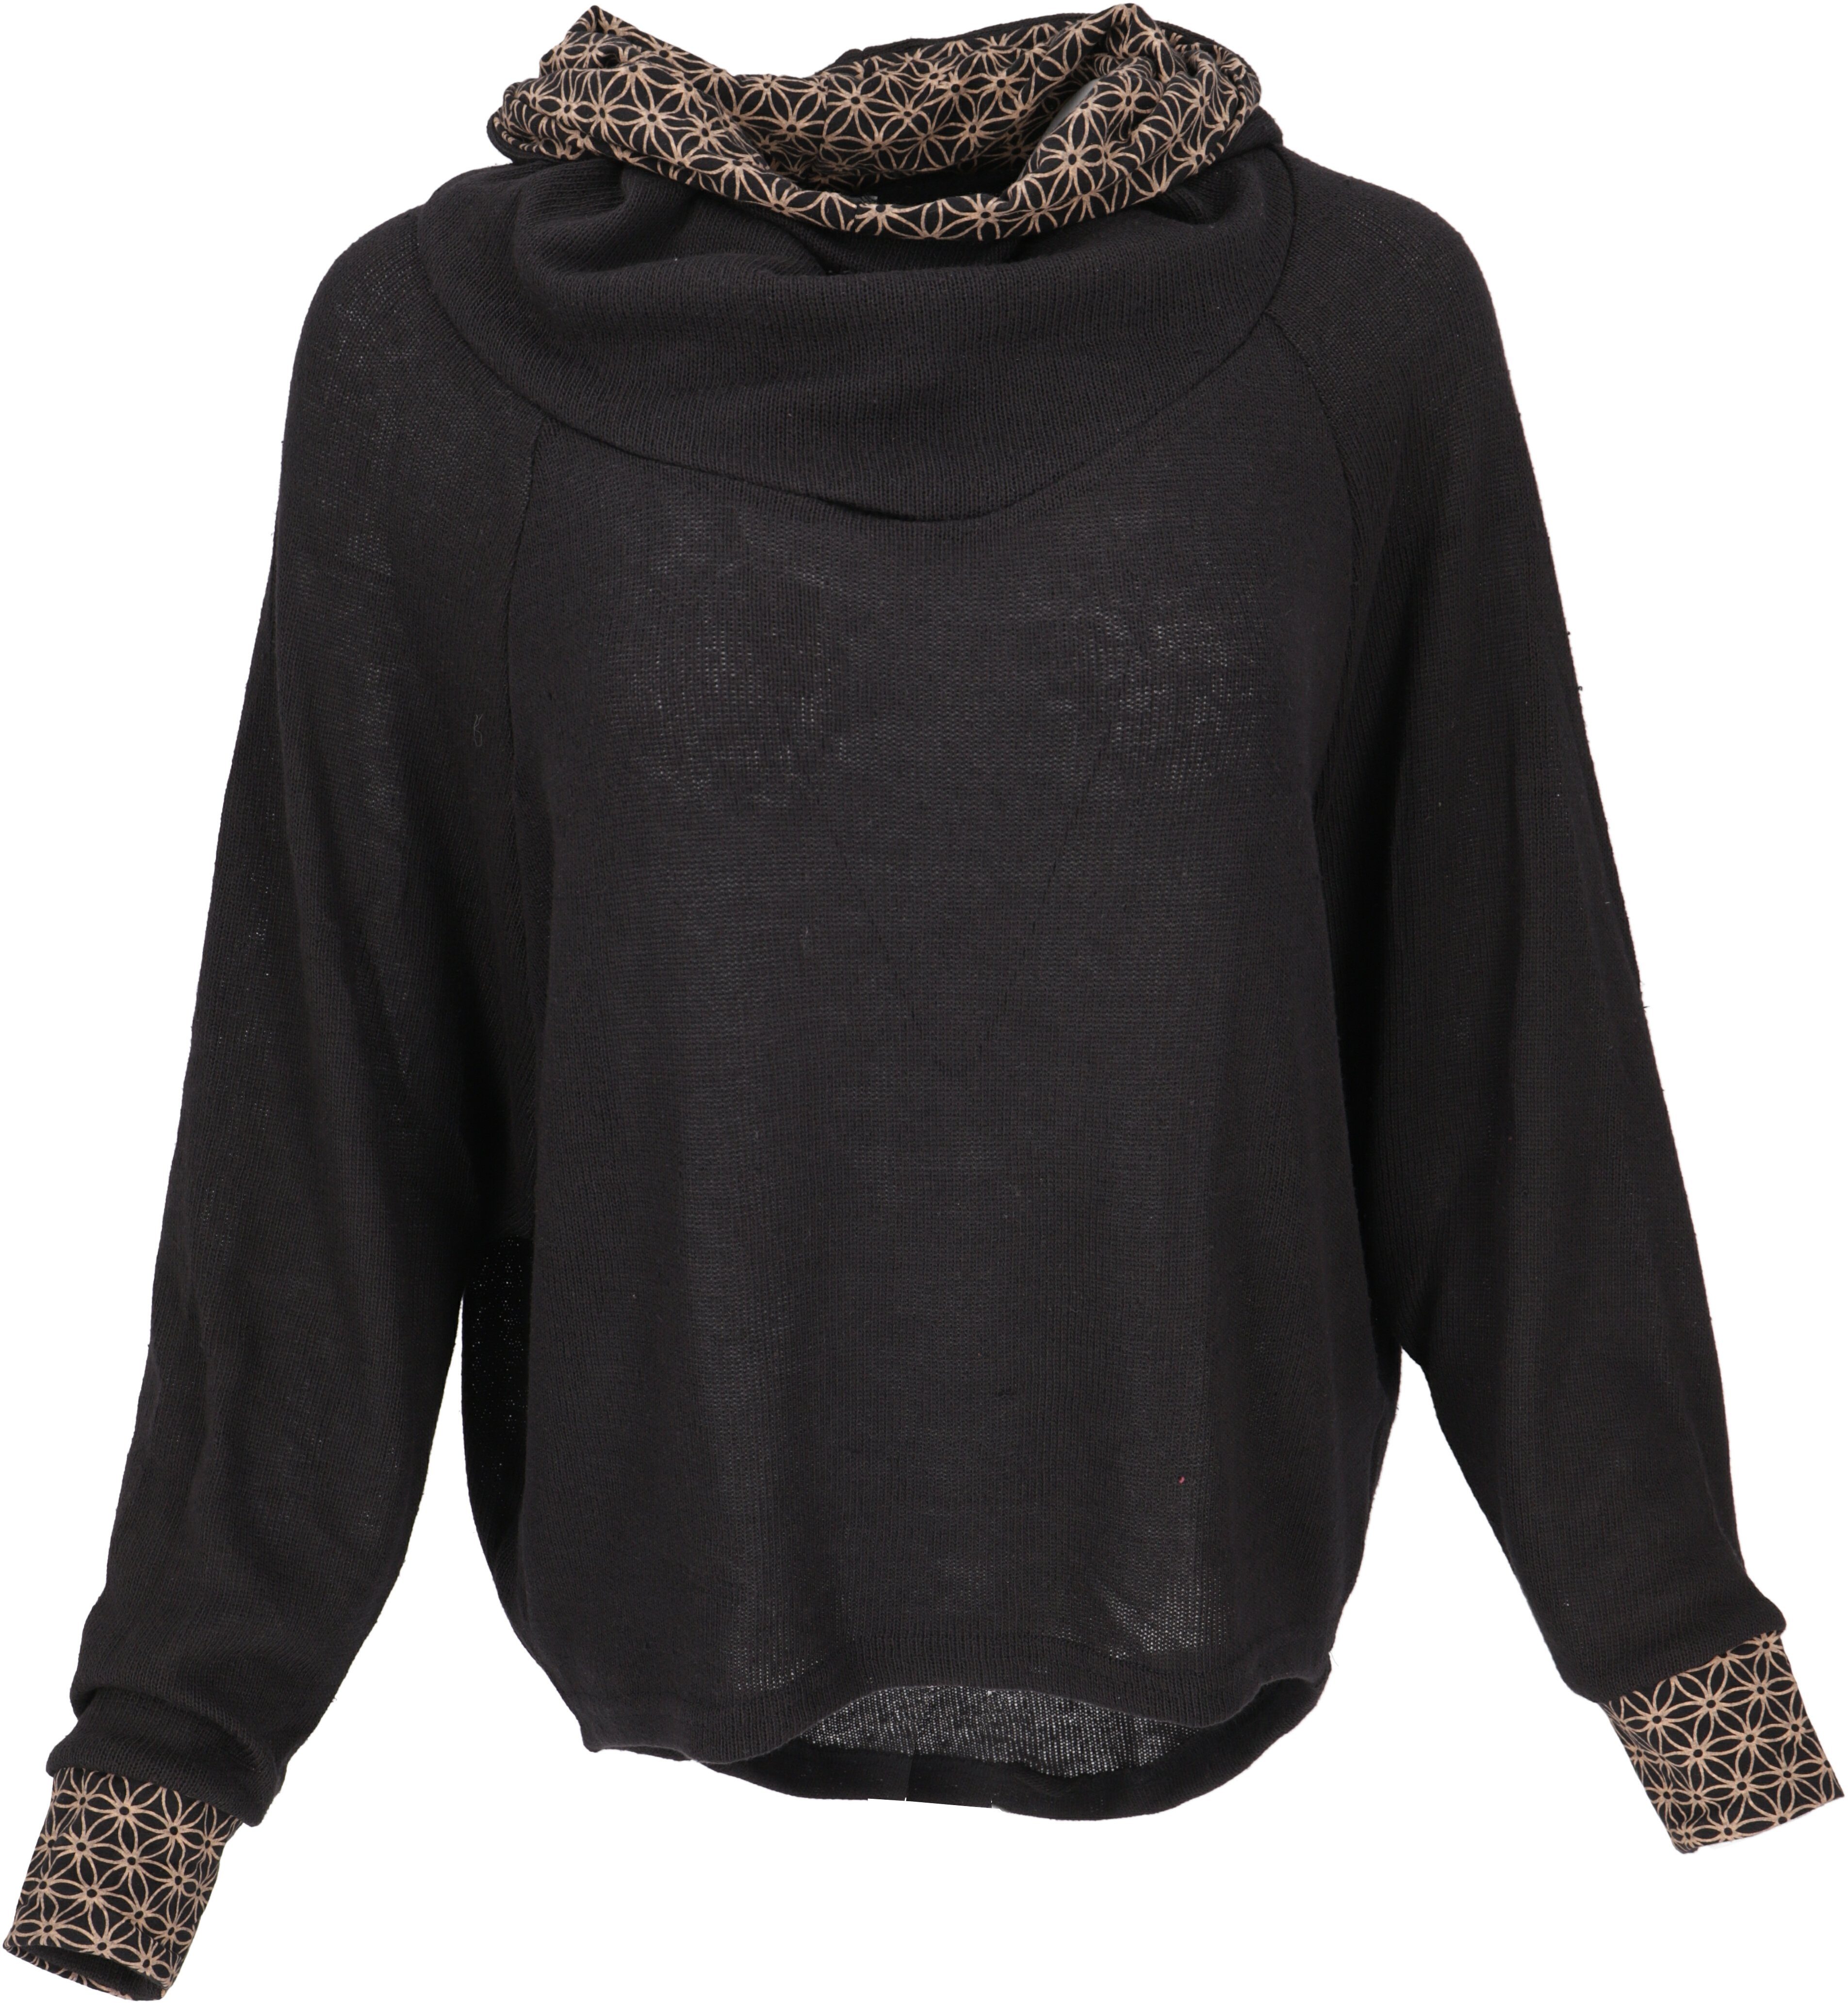 Guru-Shop -.. Kapuzenpullover schwarz Sweatshirt, Hoody, Pullover, Longsleeve alternative Bekleidung